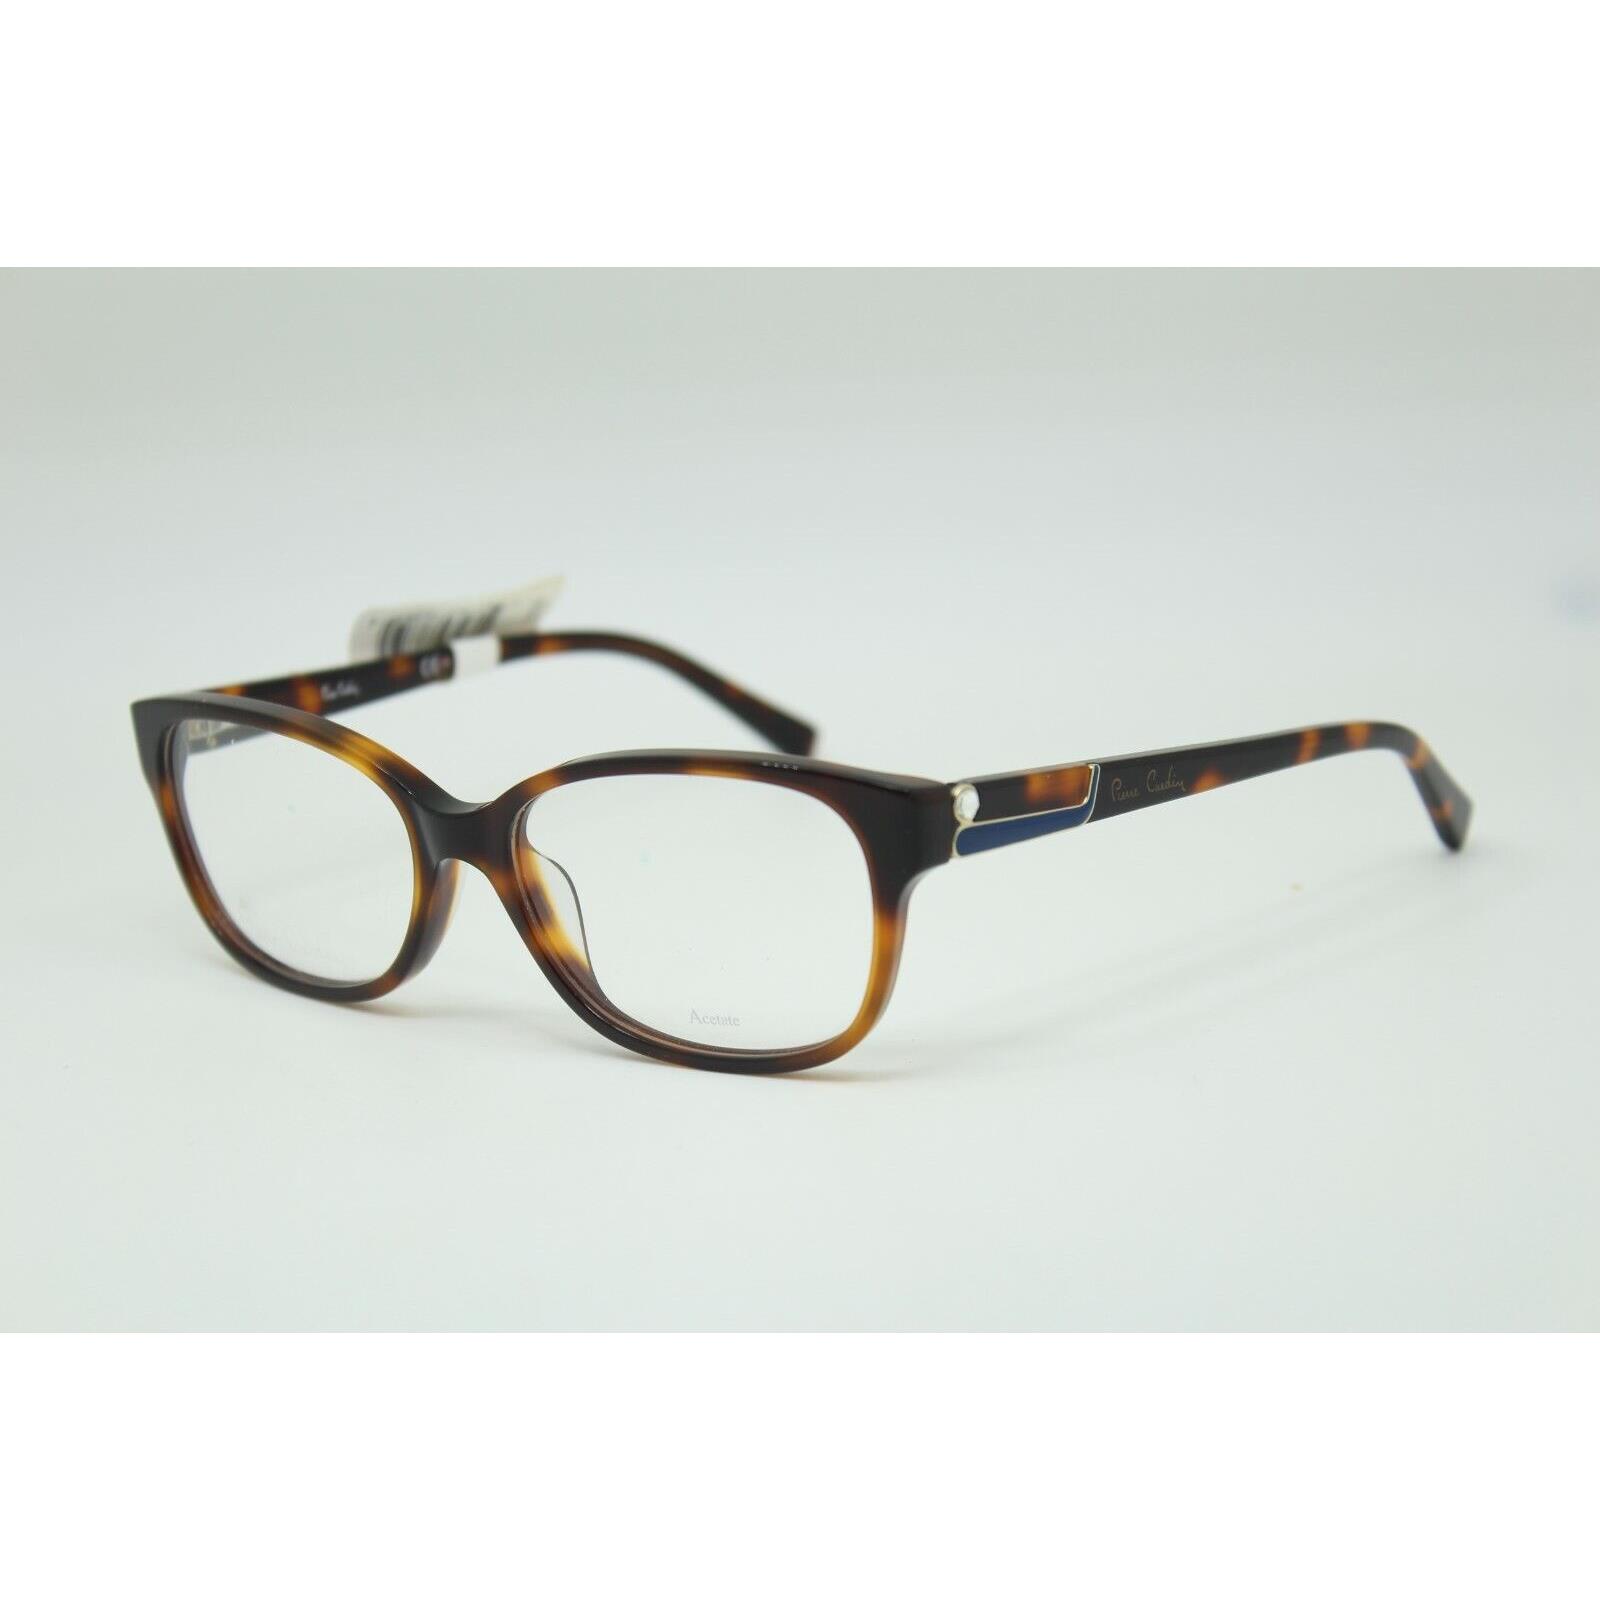 Pierre Cardin eyeglasses  - Havana , Havana Frame 0